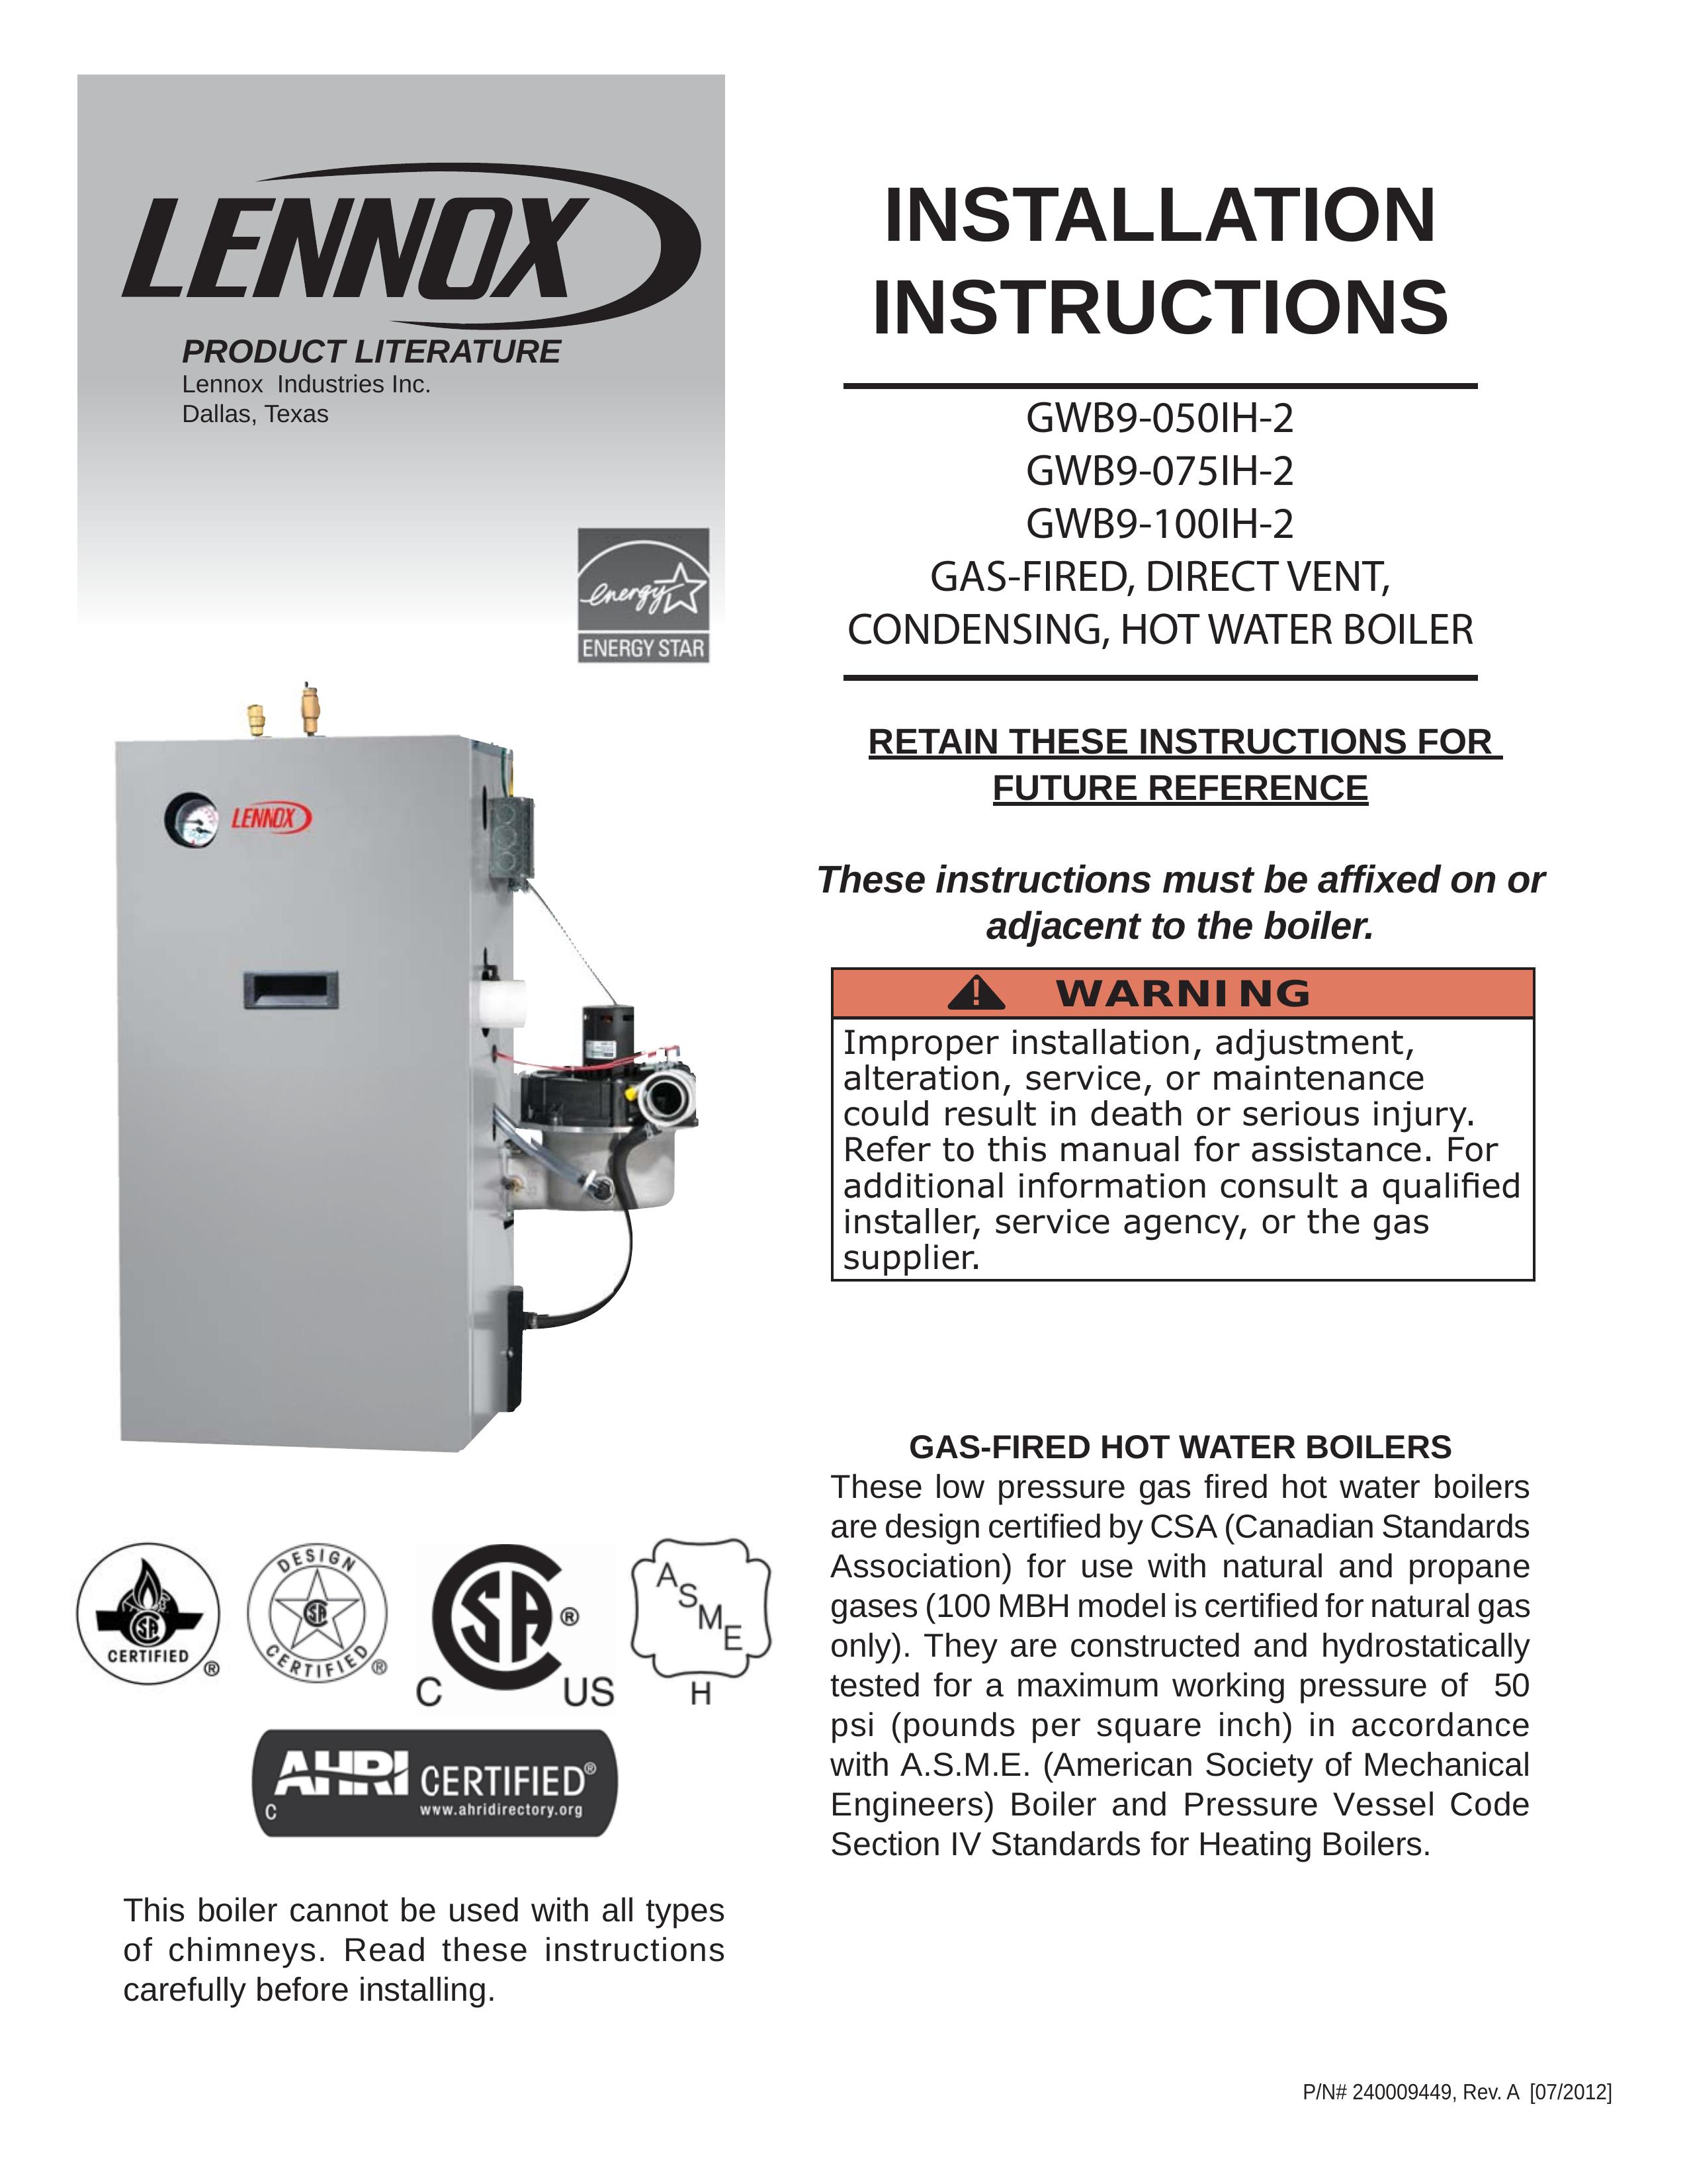 Lennox International Inc. GWB9-100IH-2 Water Dispenser User Manual